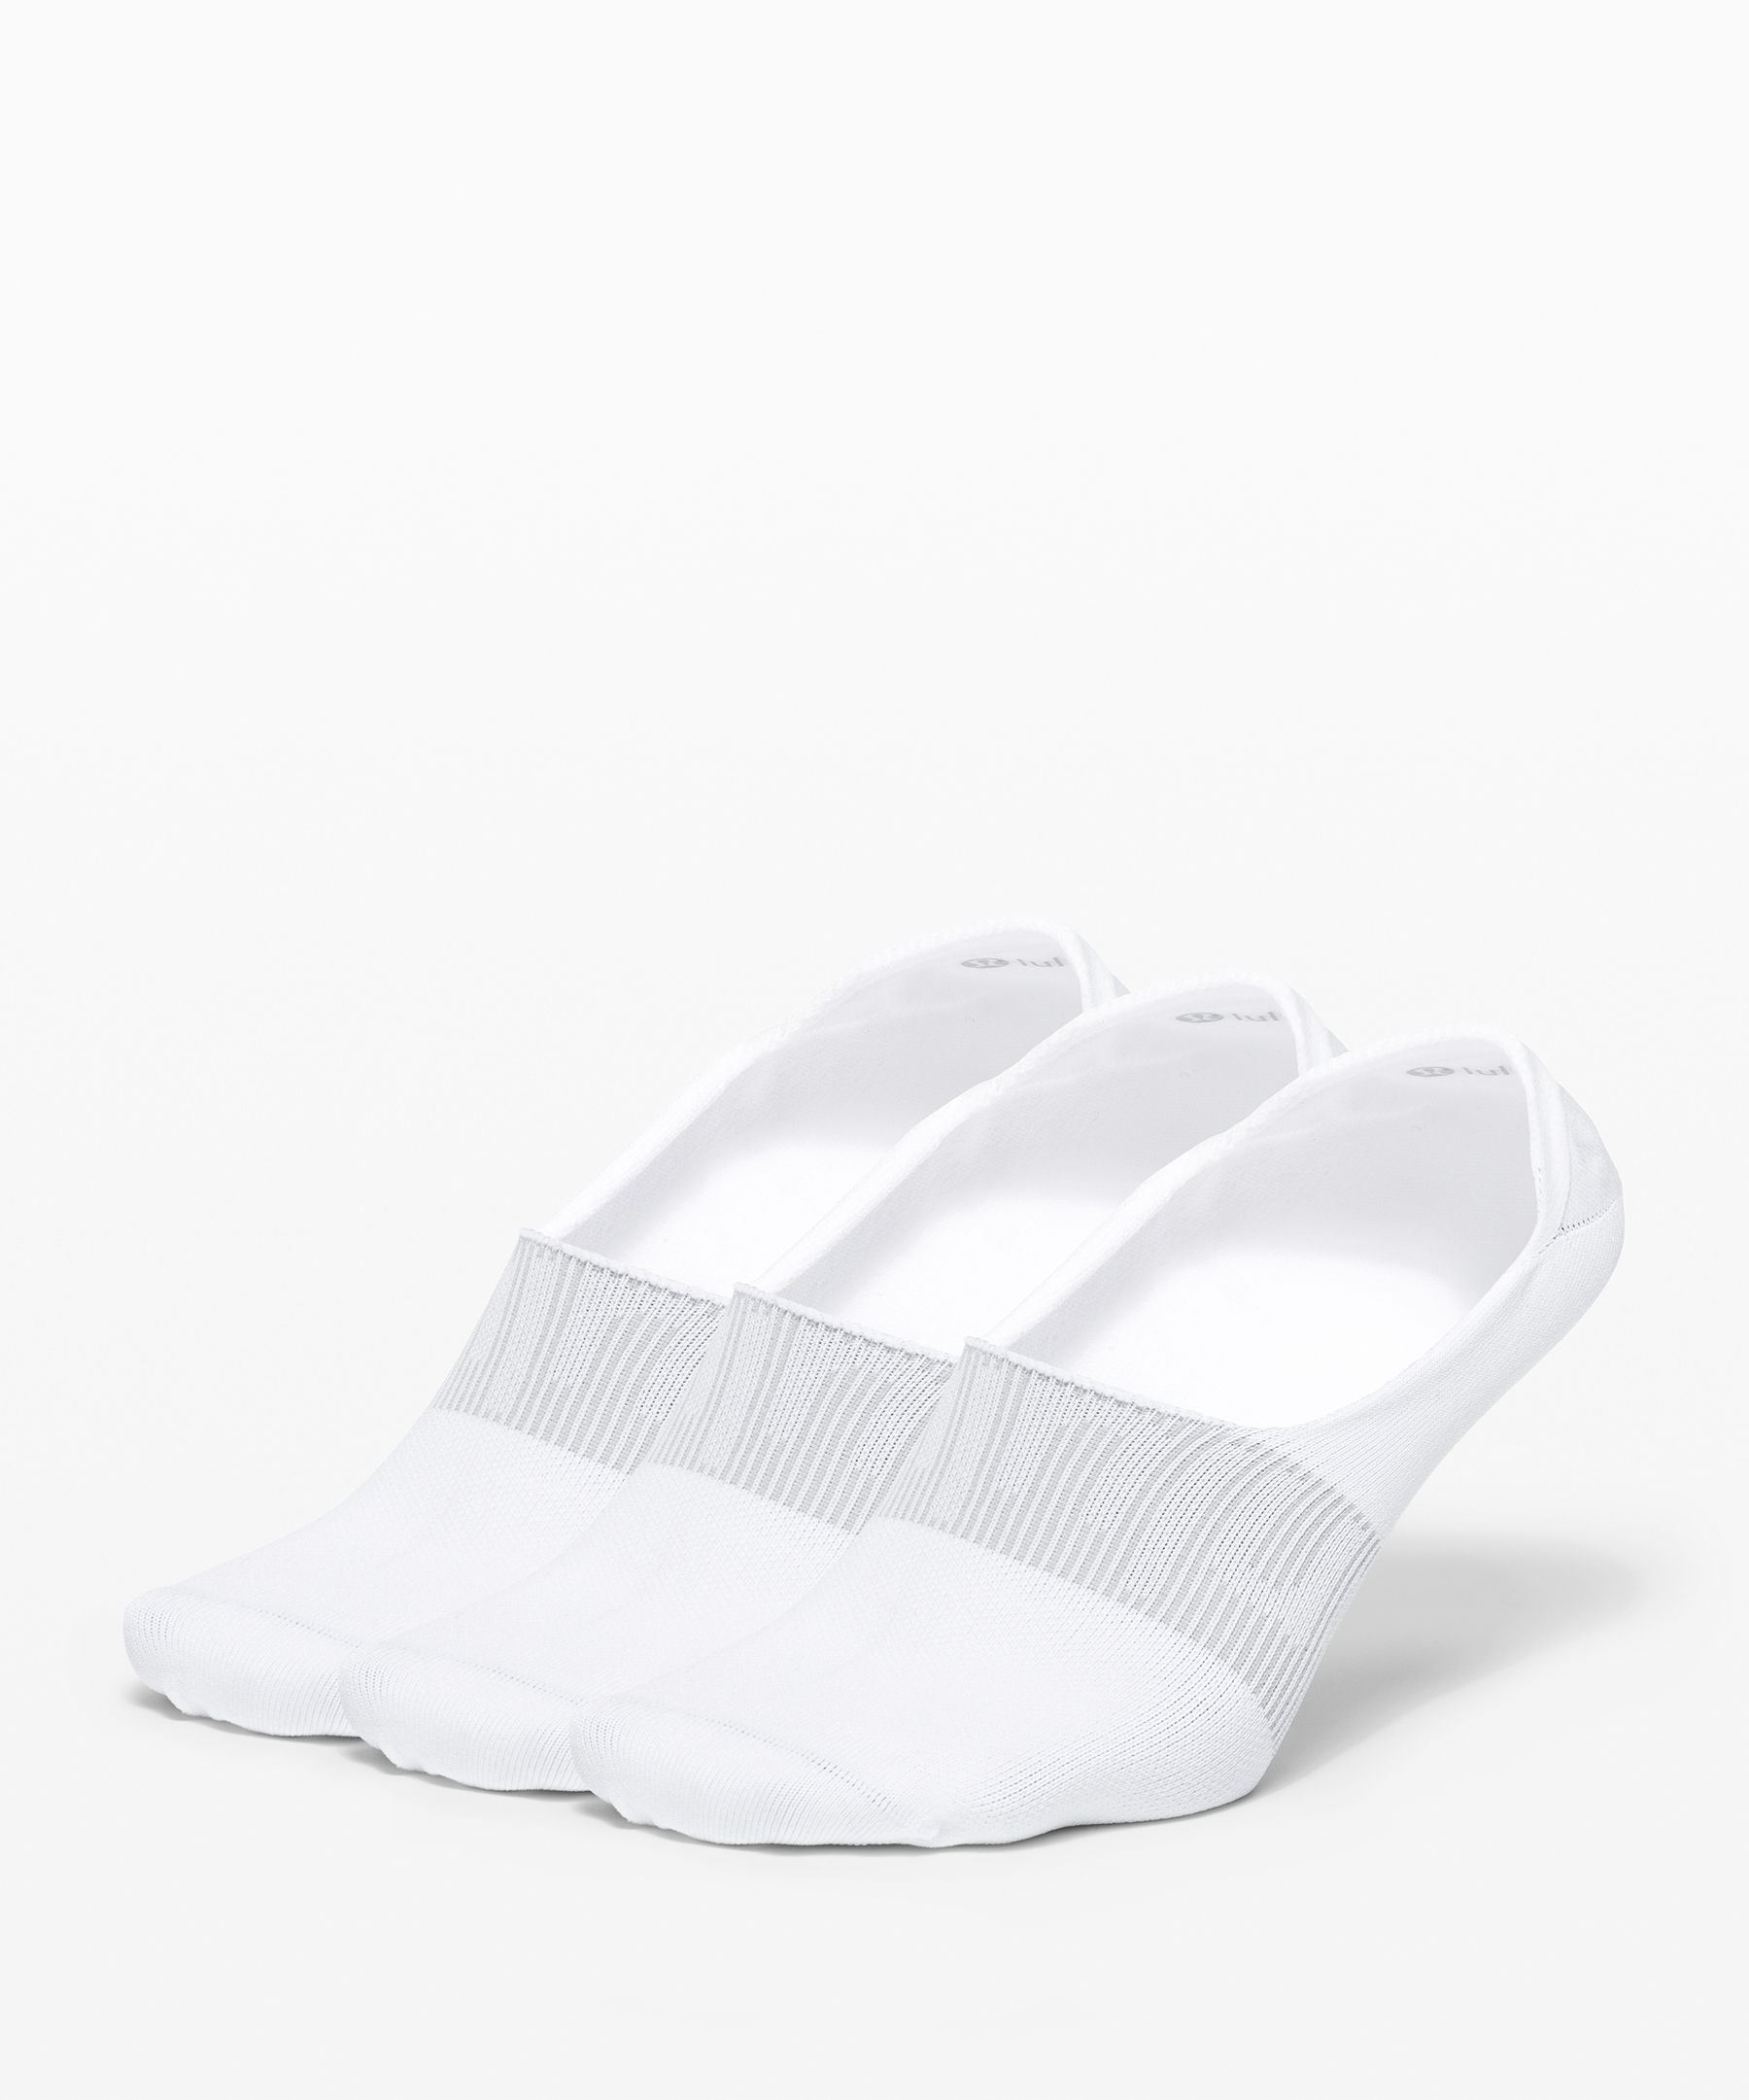 Lululemon Daily Stride No-show Socks 3 Pack In White